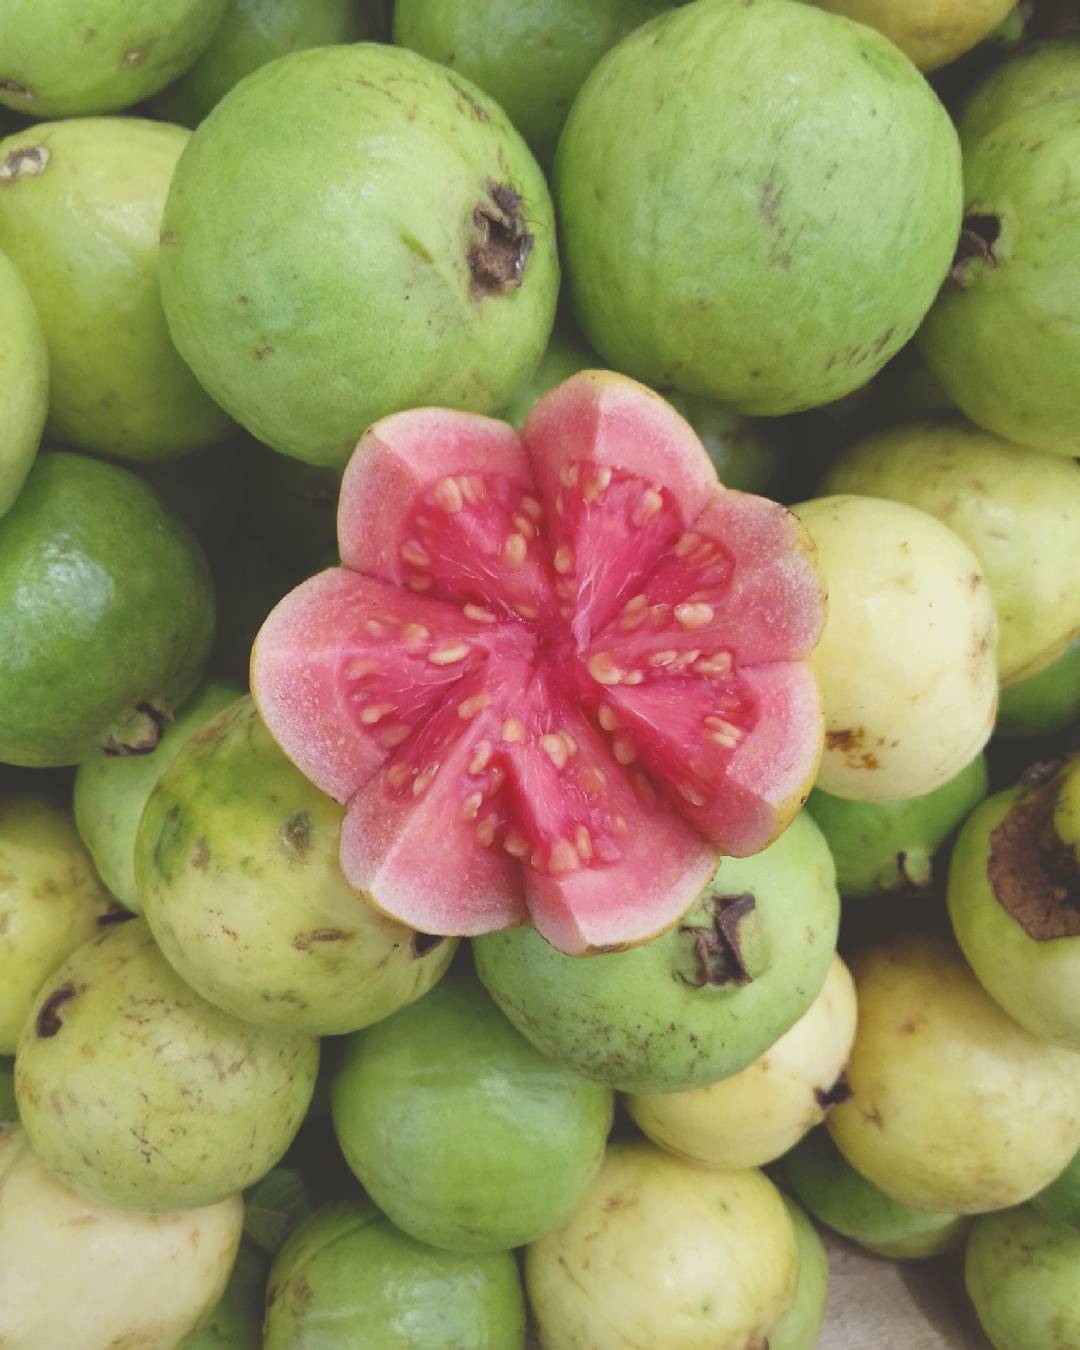 Fruits Jamaicans Love - Guava via totayl